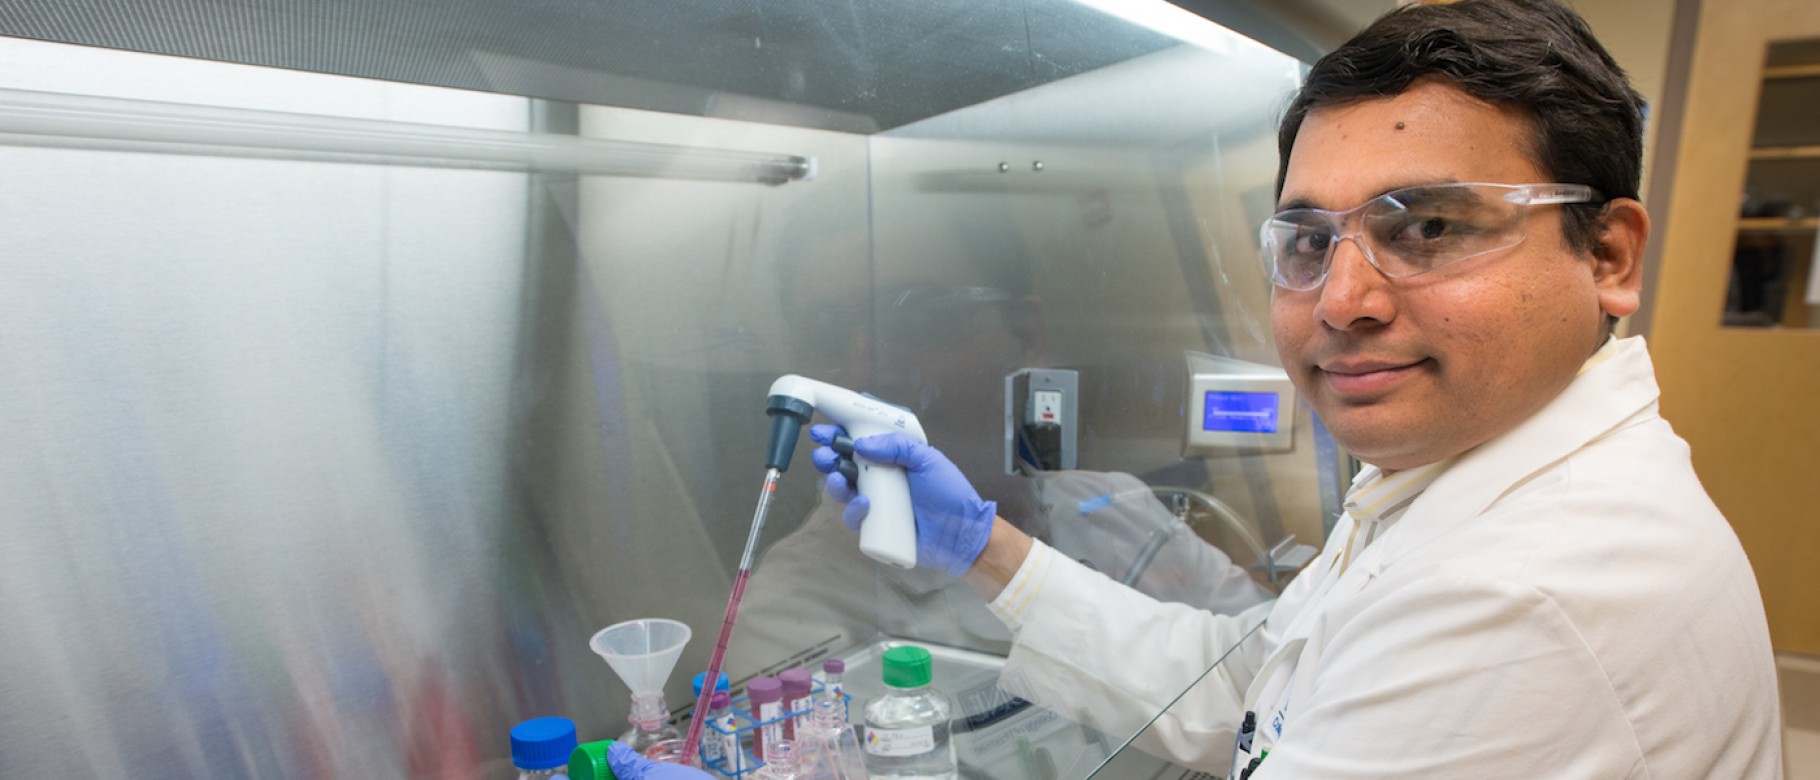 Srinidi Mohan in his lab